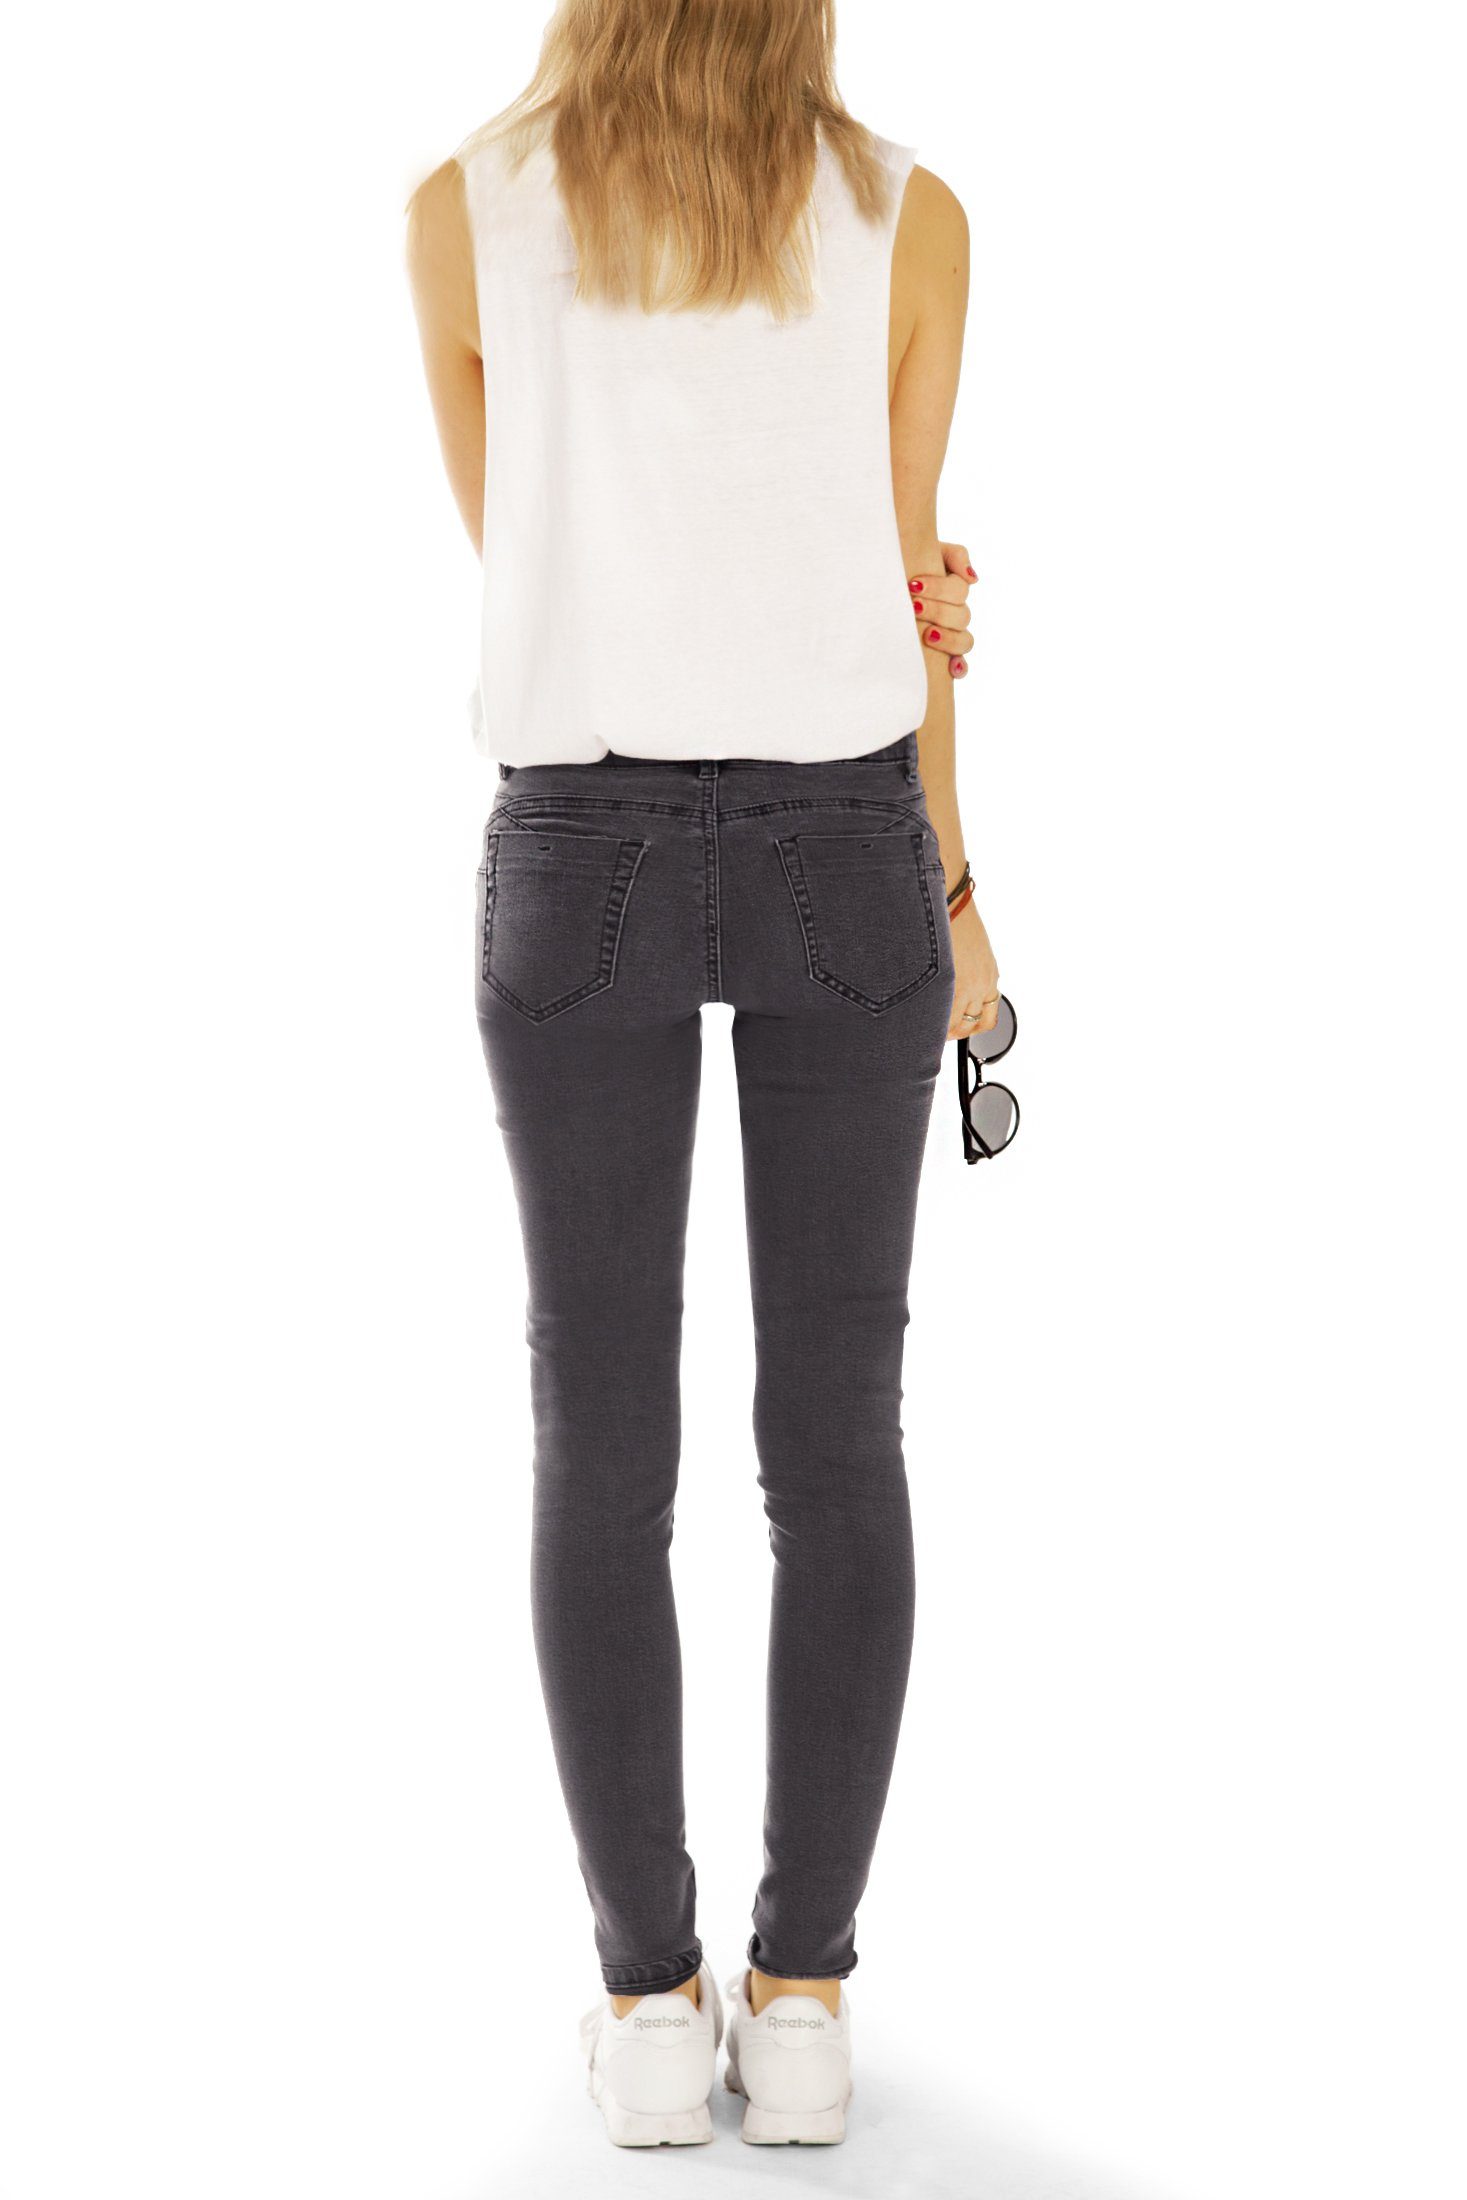 Damenjeans, fit slim styled j8f-1 waist medium Röhrenhose dungelgraue Skinny-fit-Jeans be